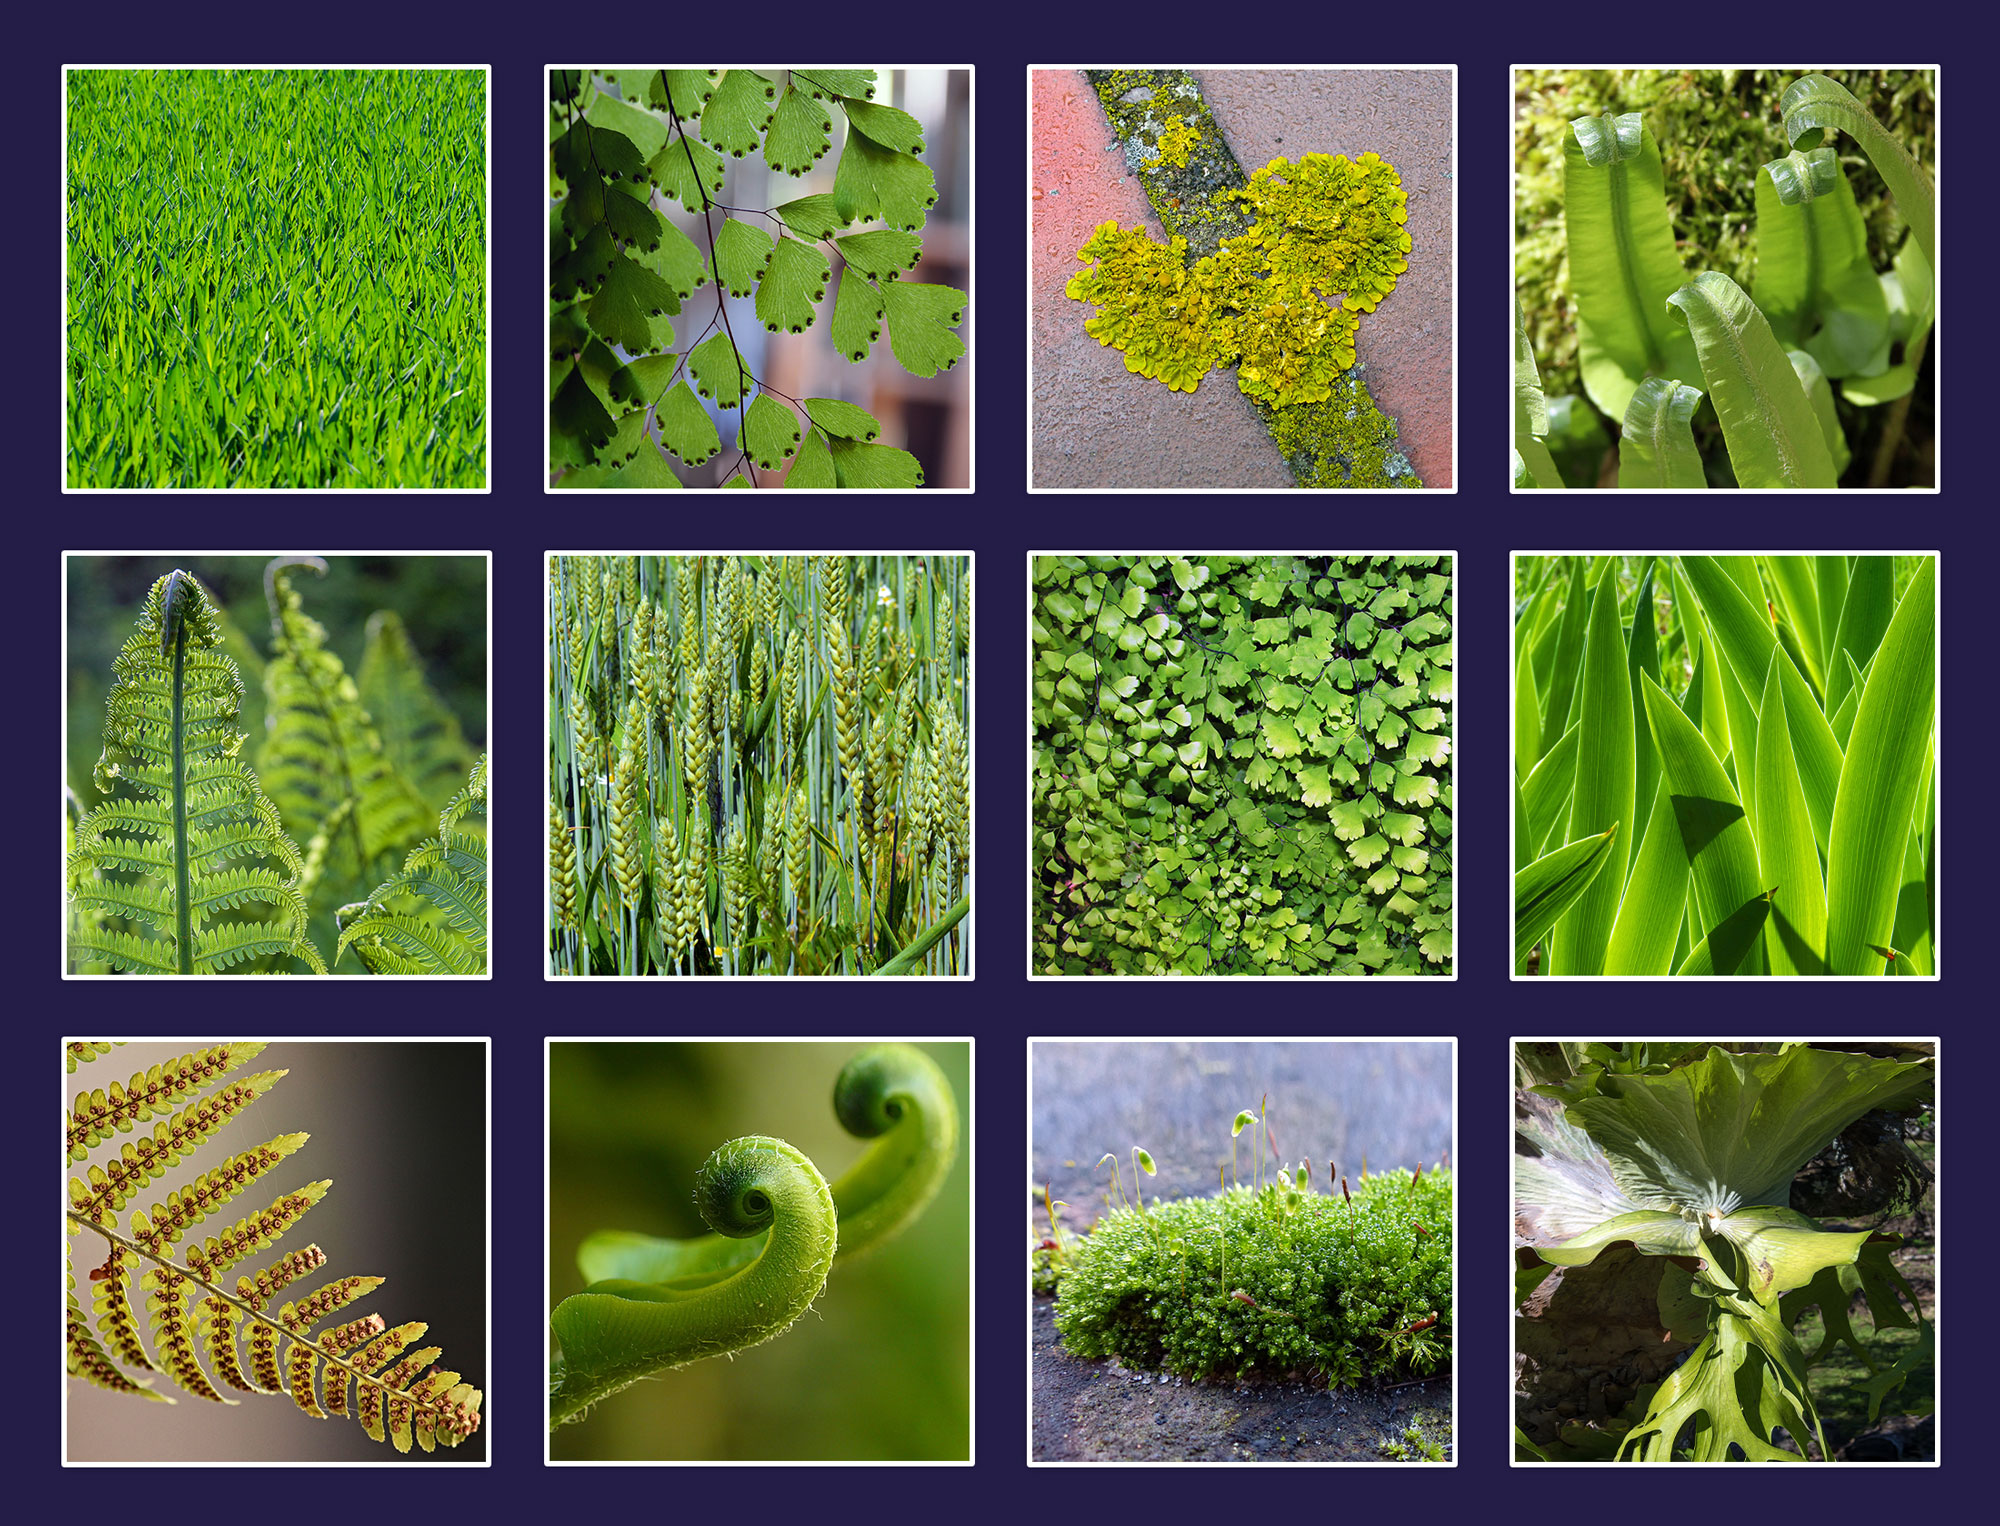 Ferns Mosses And Lichen 7 English Through Gardening By Reep